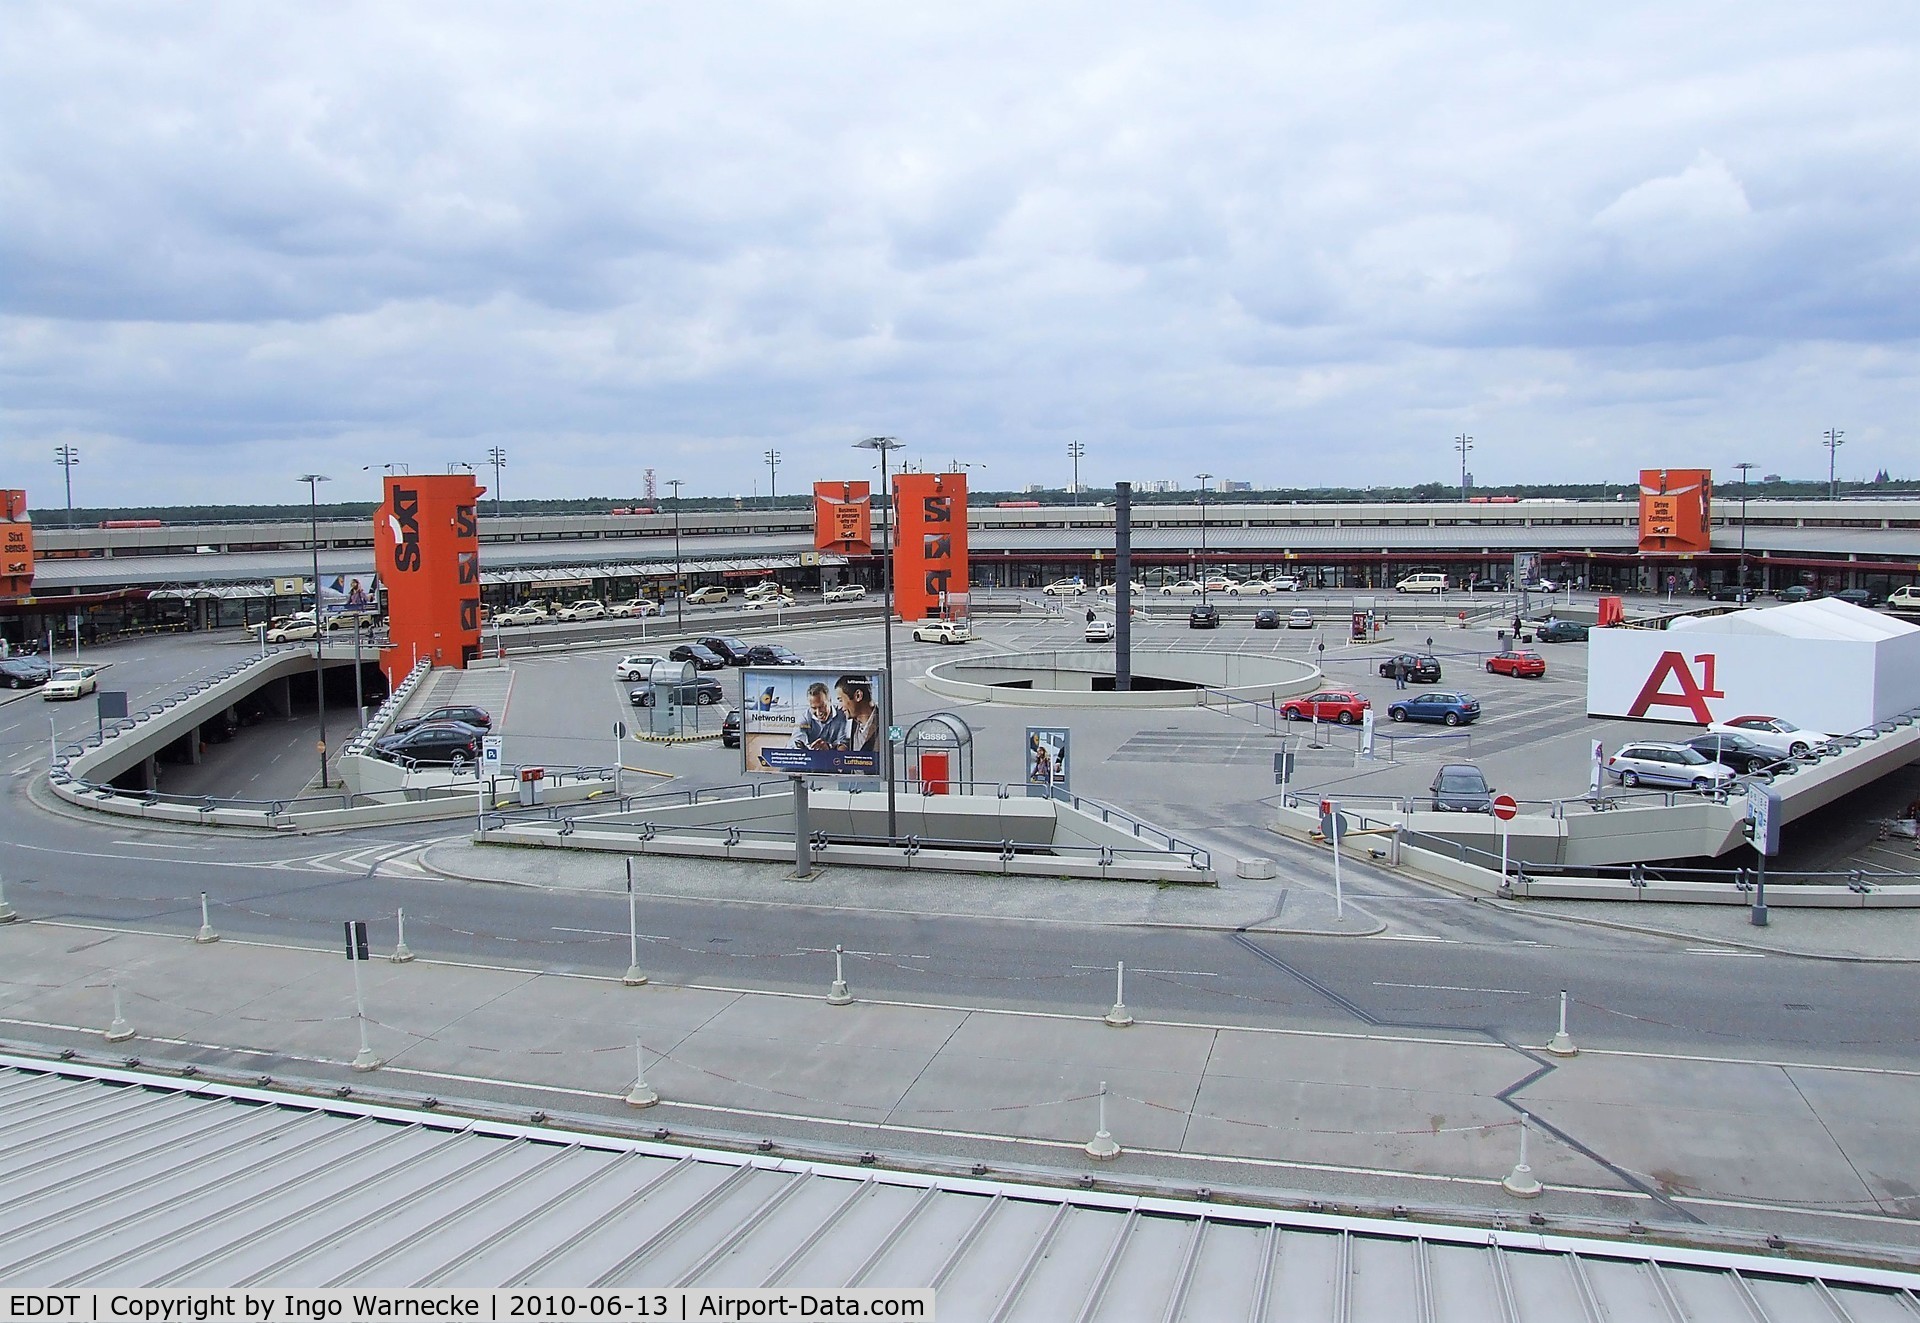 Tegel International Airport (closing in 2011), Berlin Germany (EDDT) - looking inside the hexagonal main terminal at Berlin Tegel airport